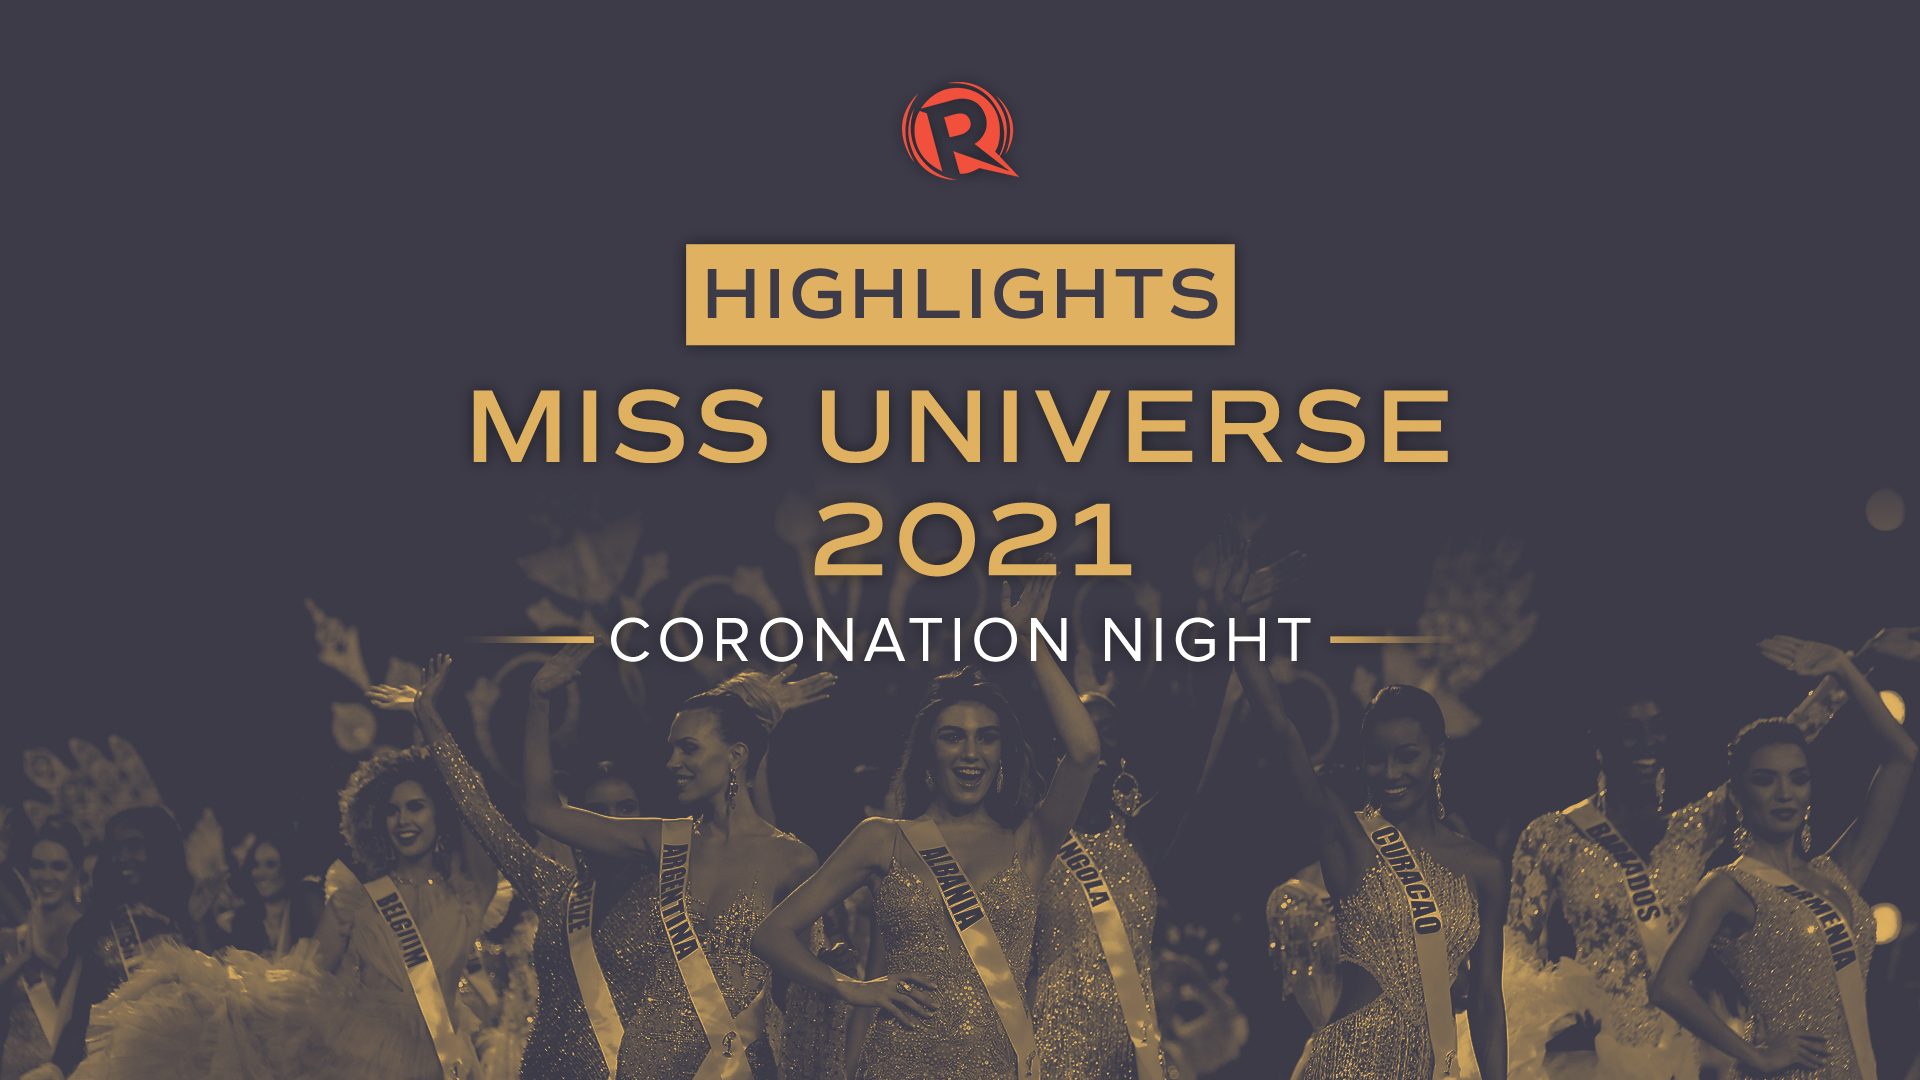 HIGHLIGHTS: Miss Universe 2021 coronation night